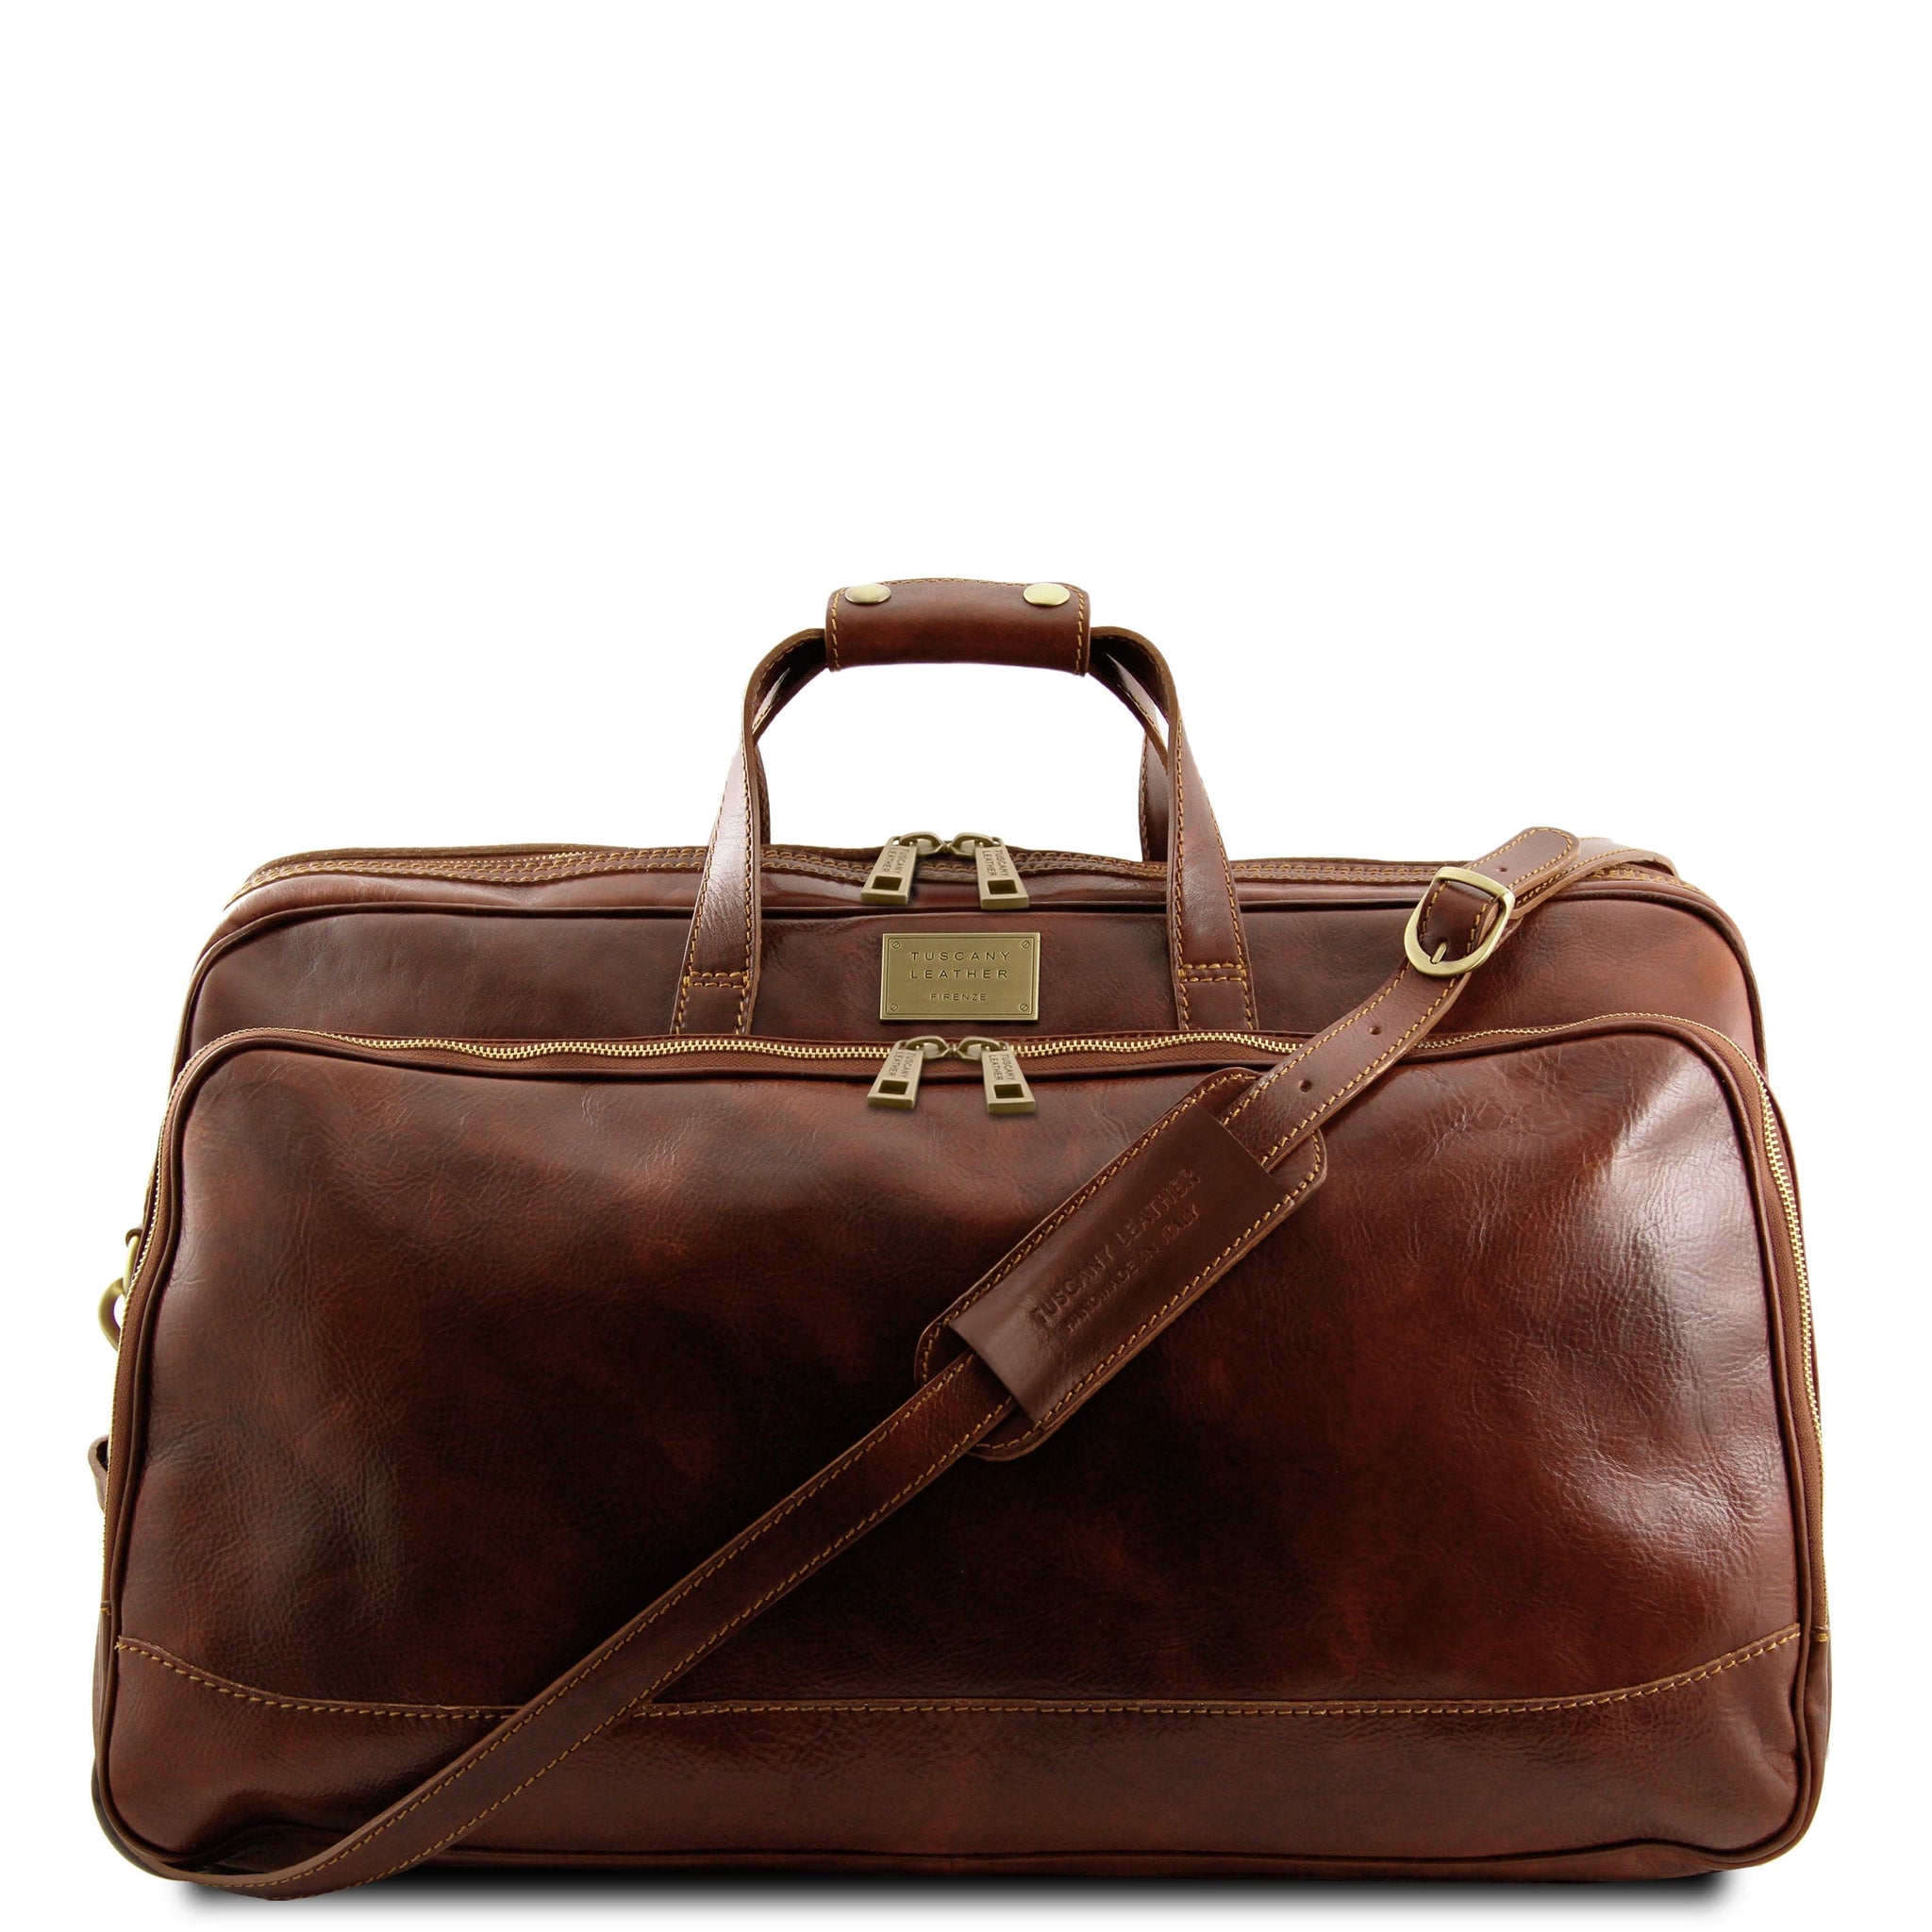 Bora Bora - Trolley leather bag - Small size | TL3065 – San Rocco Italia